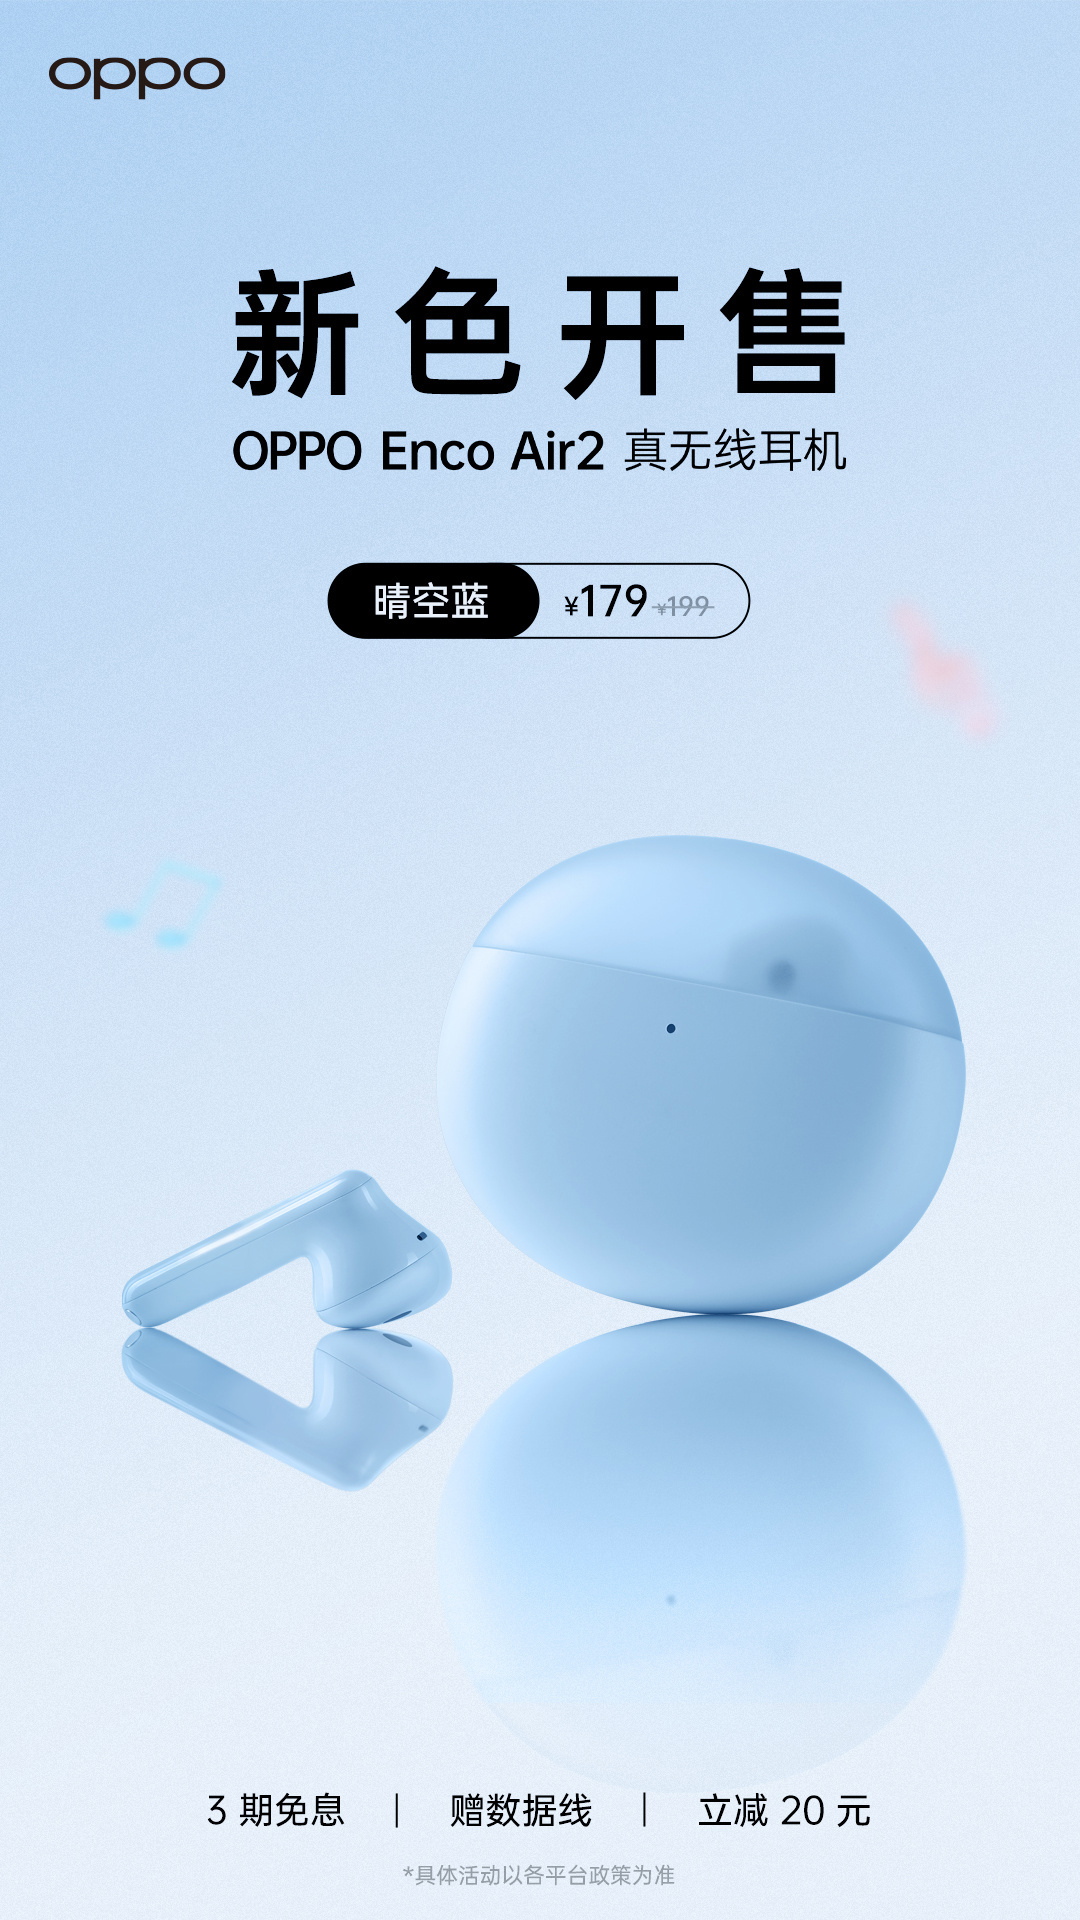 OPPO Enco Air 2 Clear Sky Blue